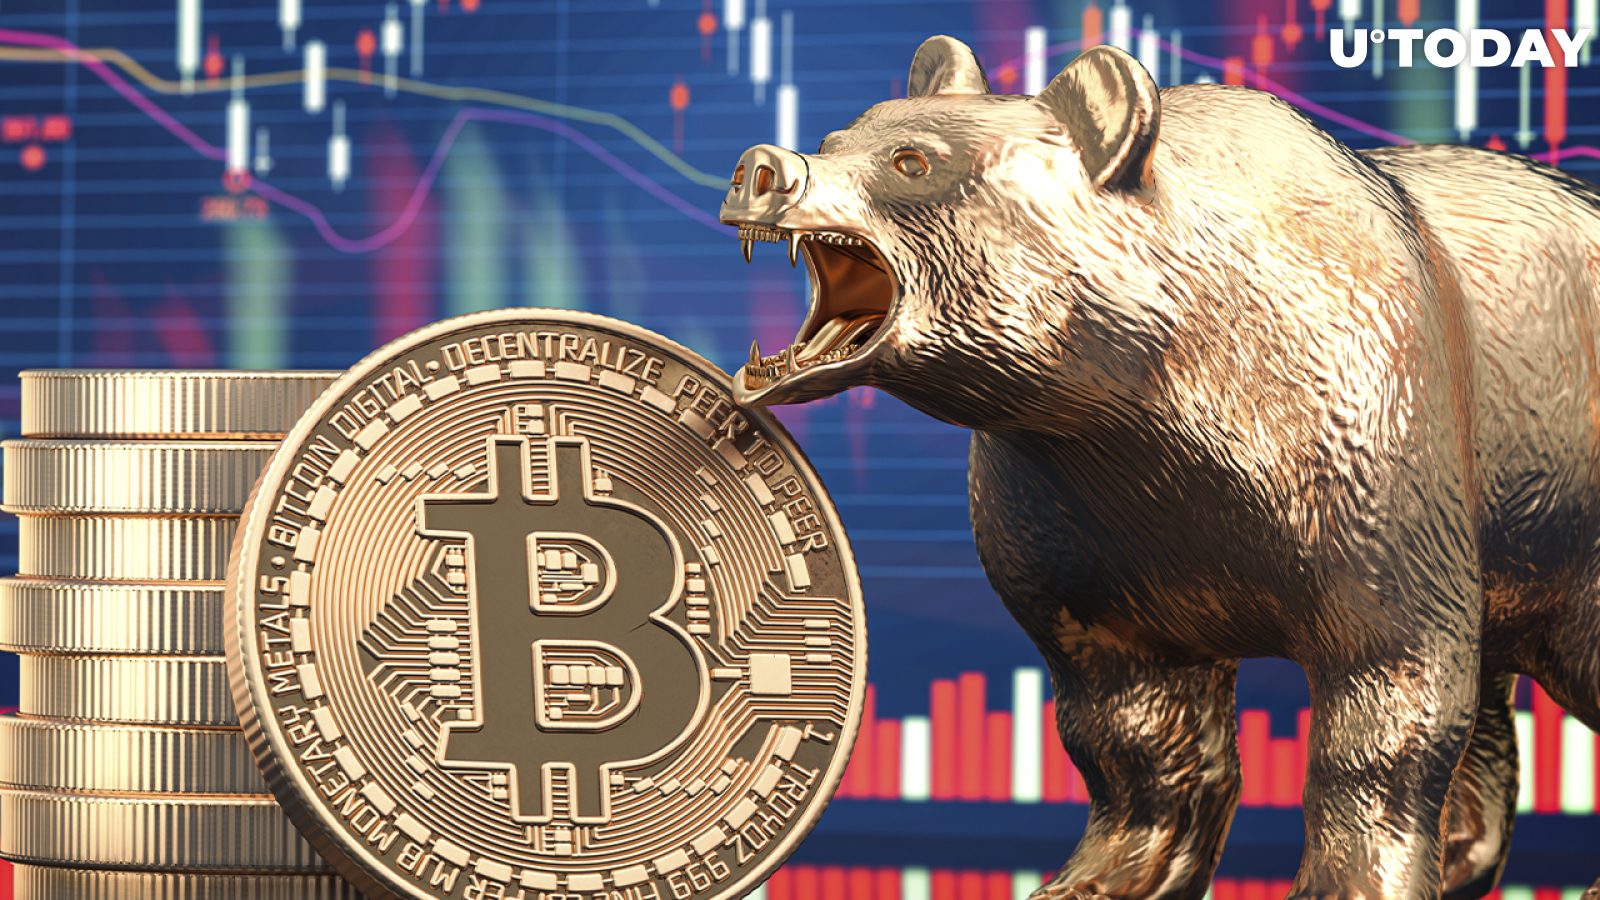 Bitcoin’s Long Bearish Streak Has a Silver Lining